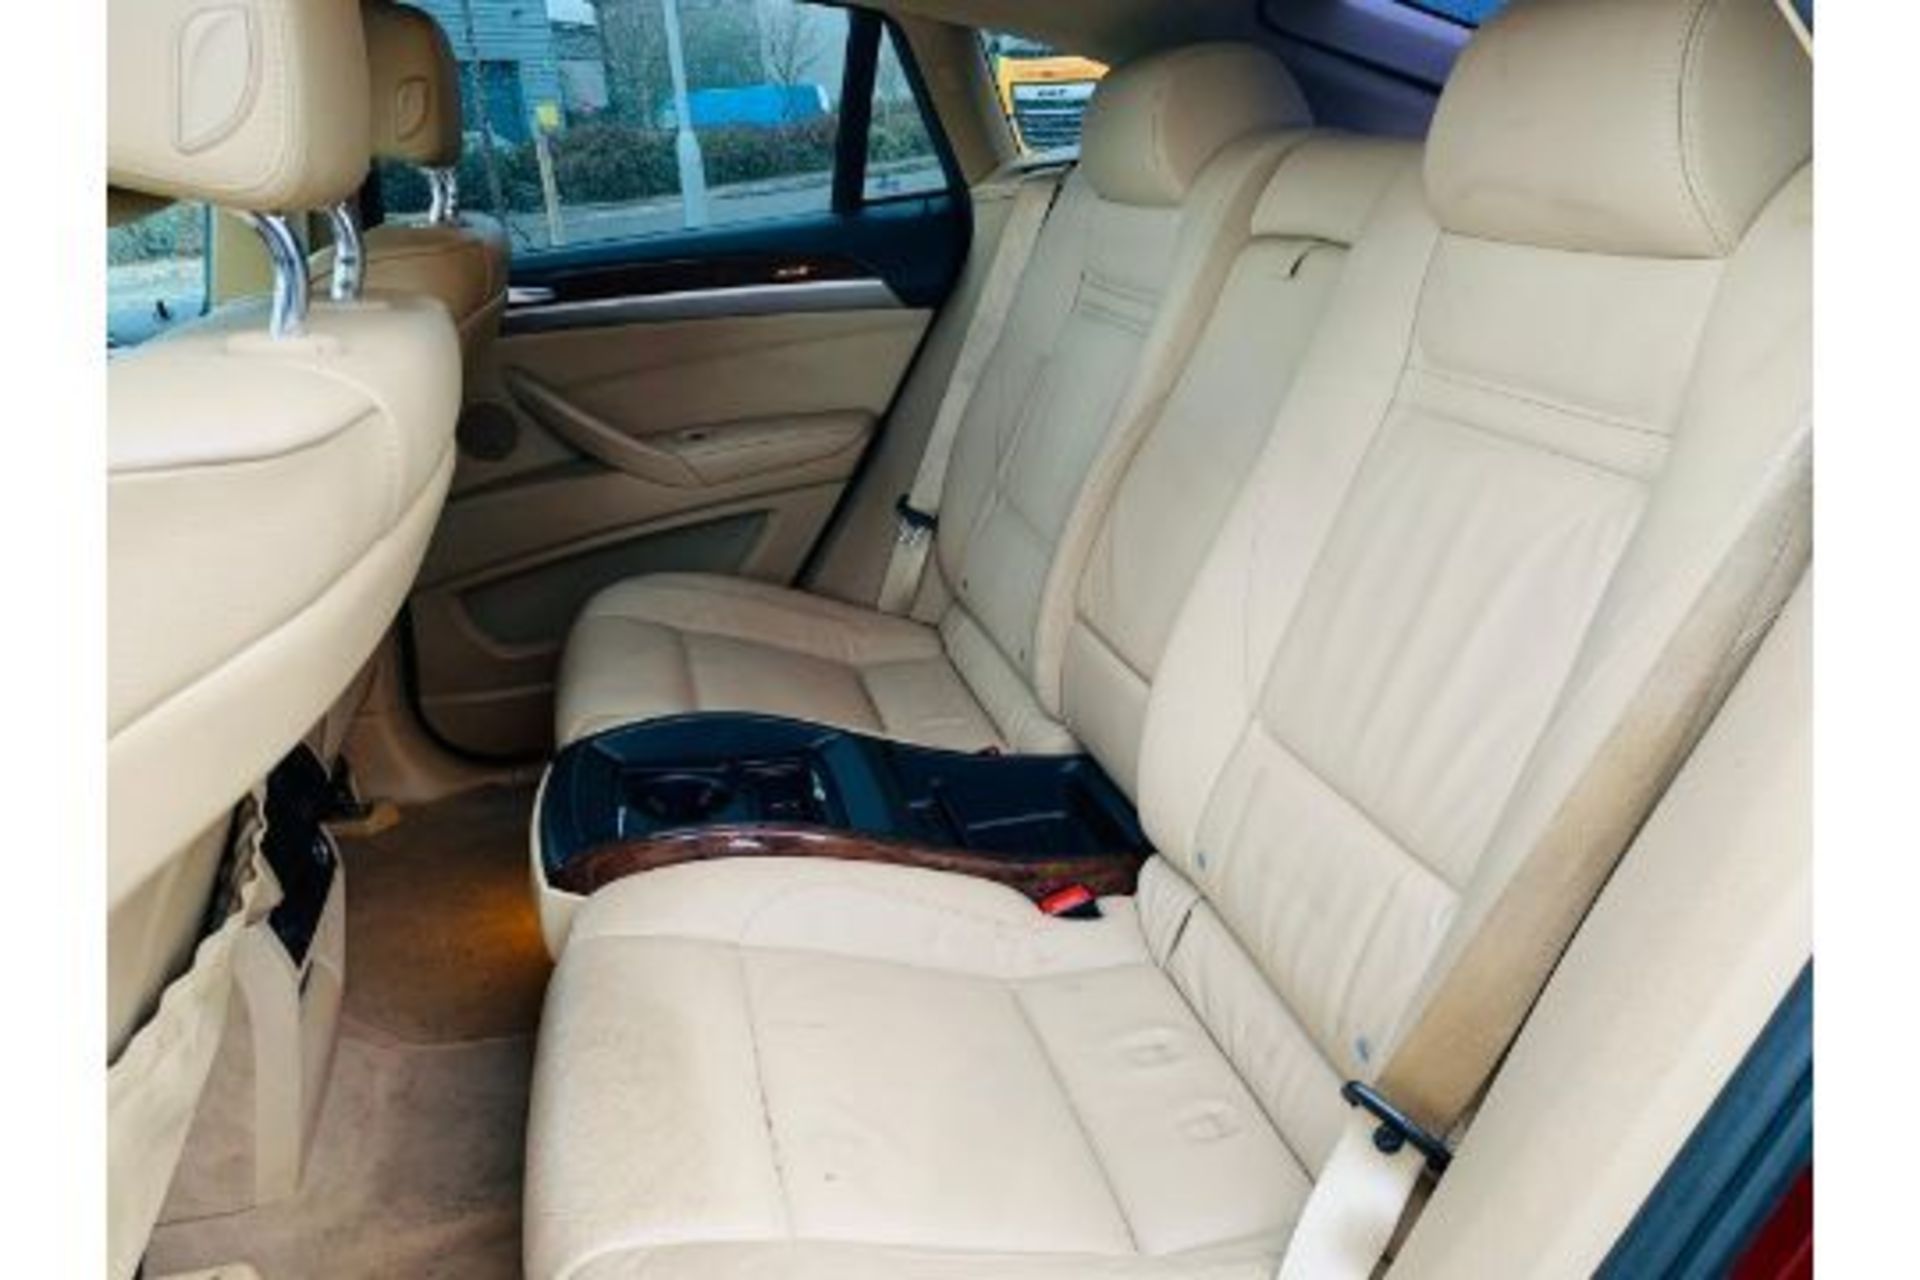 (RESERVE MET) MW X6 xDrive 3.0d Auto - 2014 Reg - Leather Interior -Parking Sensors - Reversing Cam - Image 22 of 29